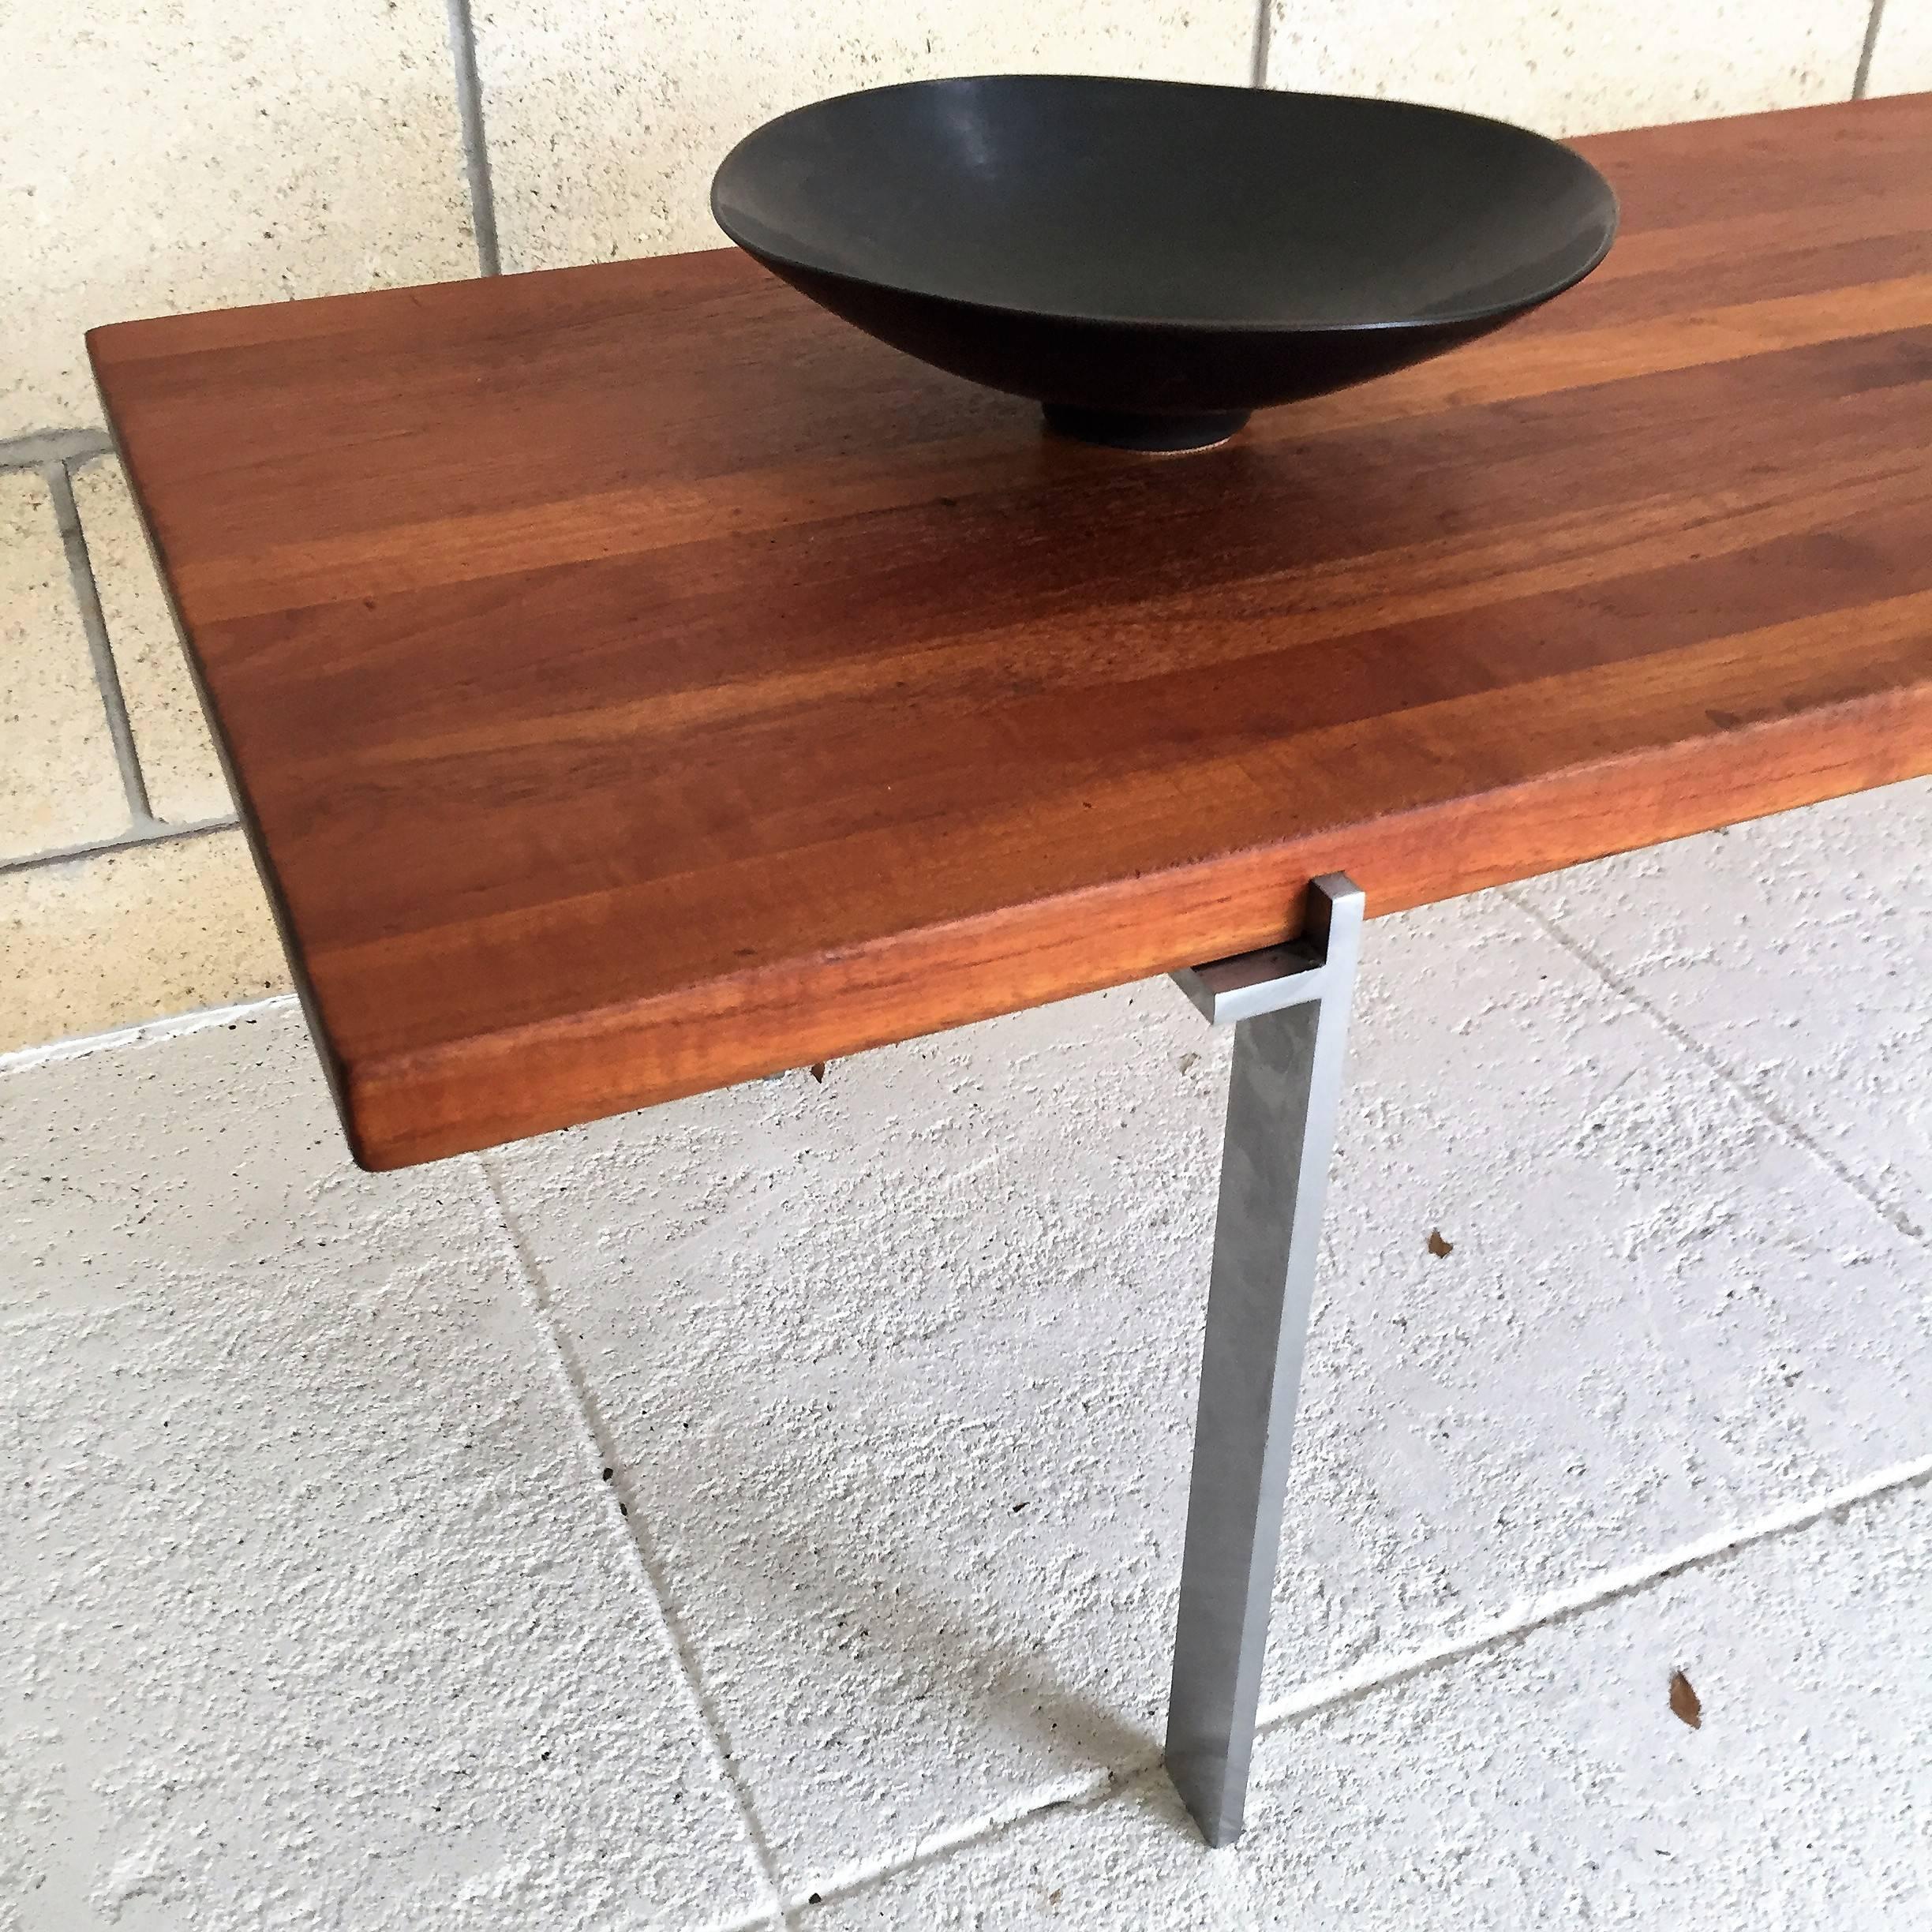 Danish Modern Teak and Stainless Steel Coffee Table in Style of Poul Kjaerholm 1